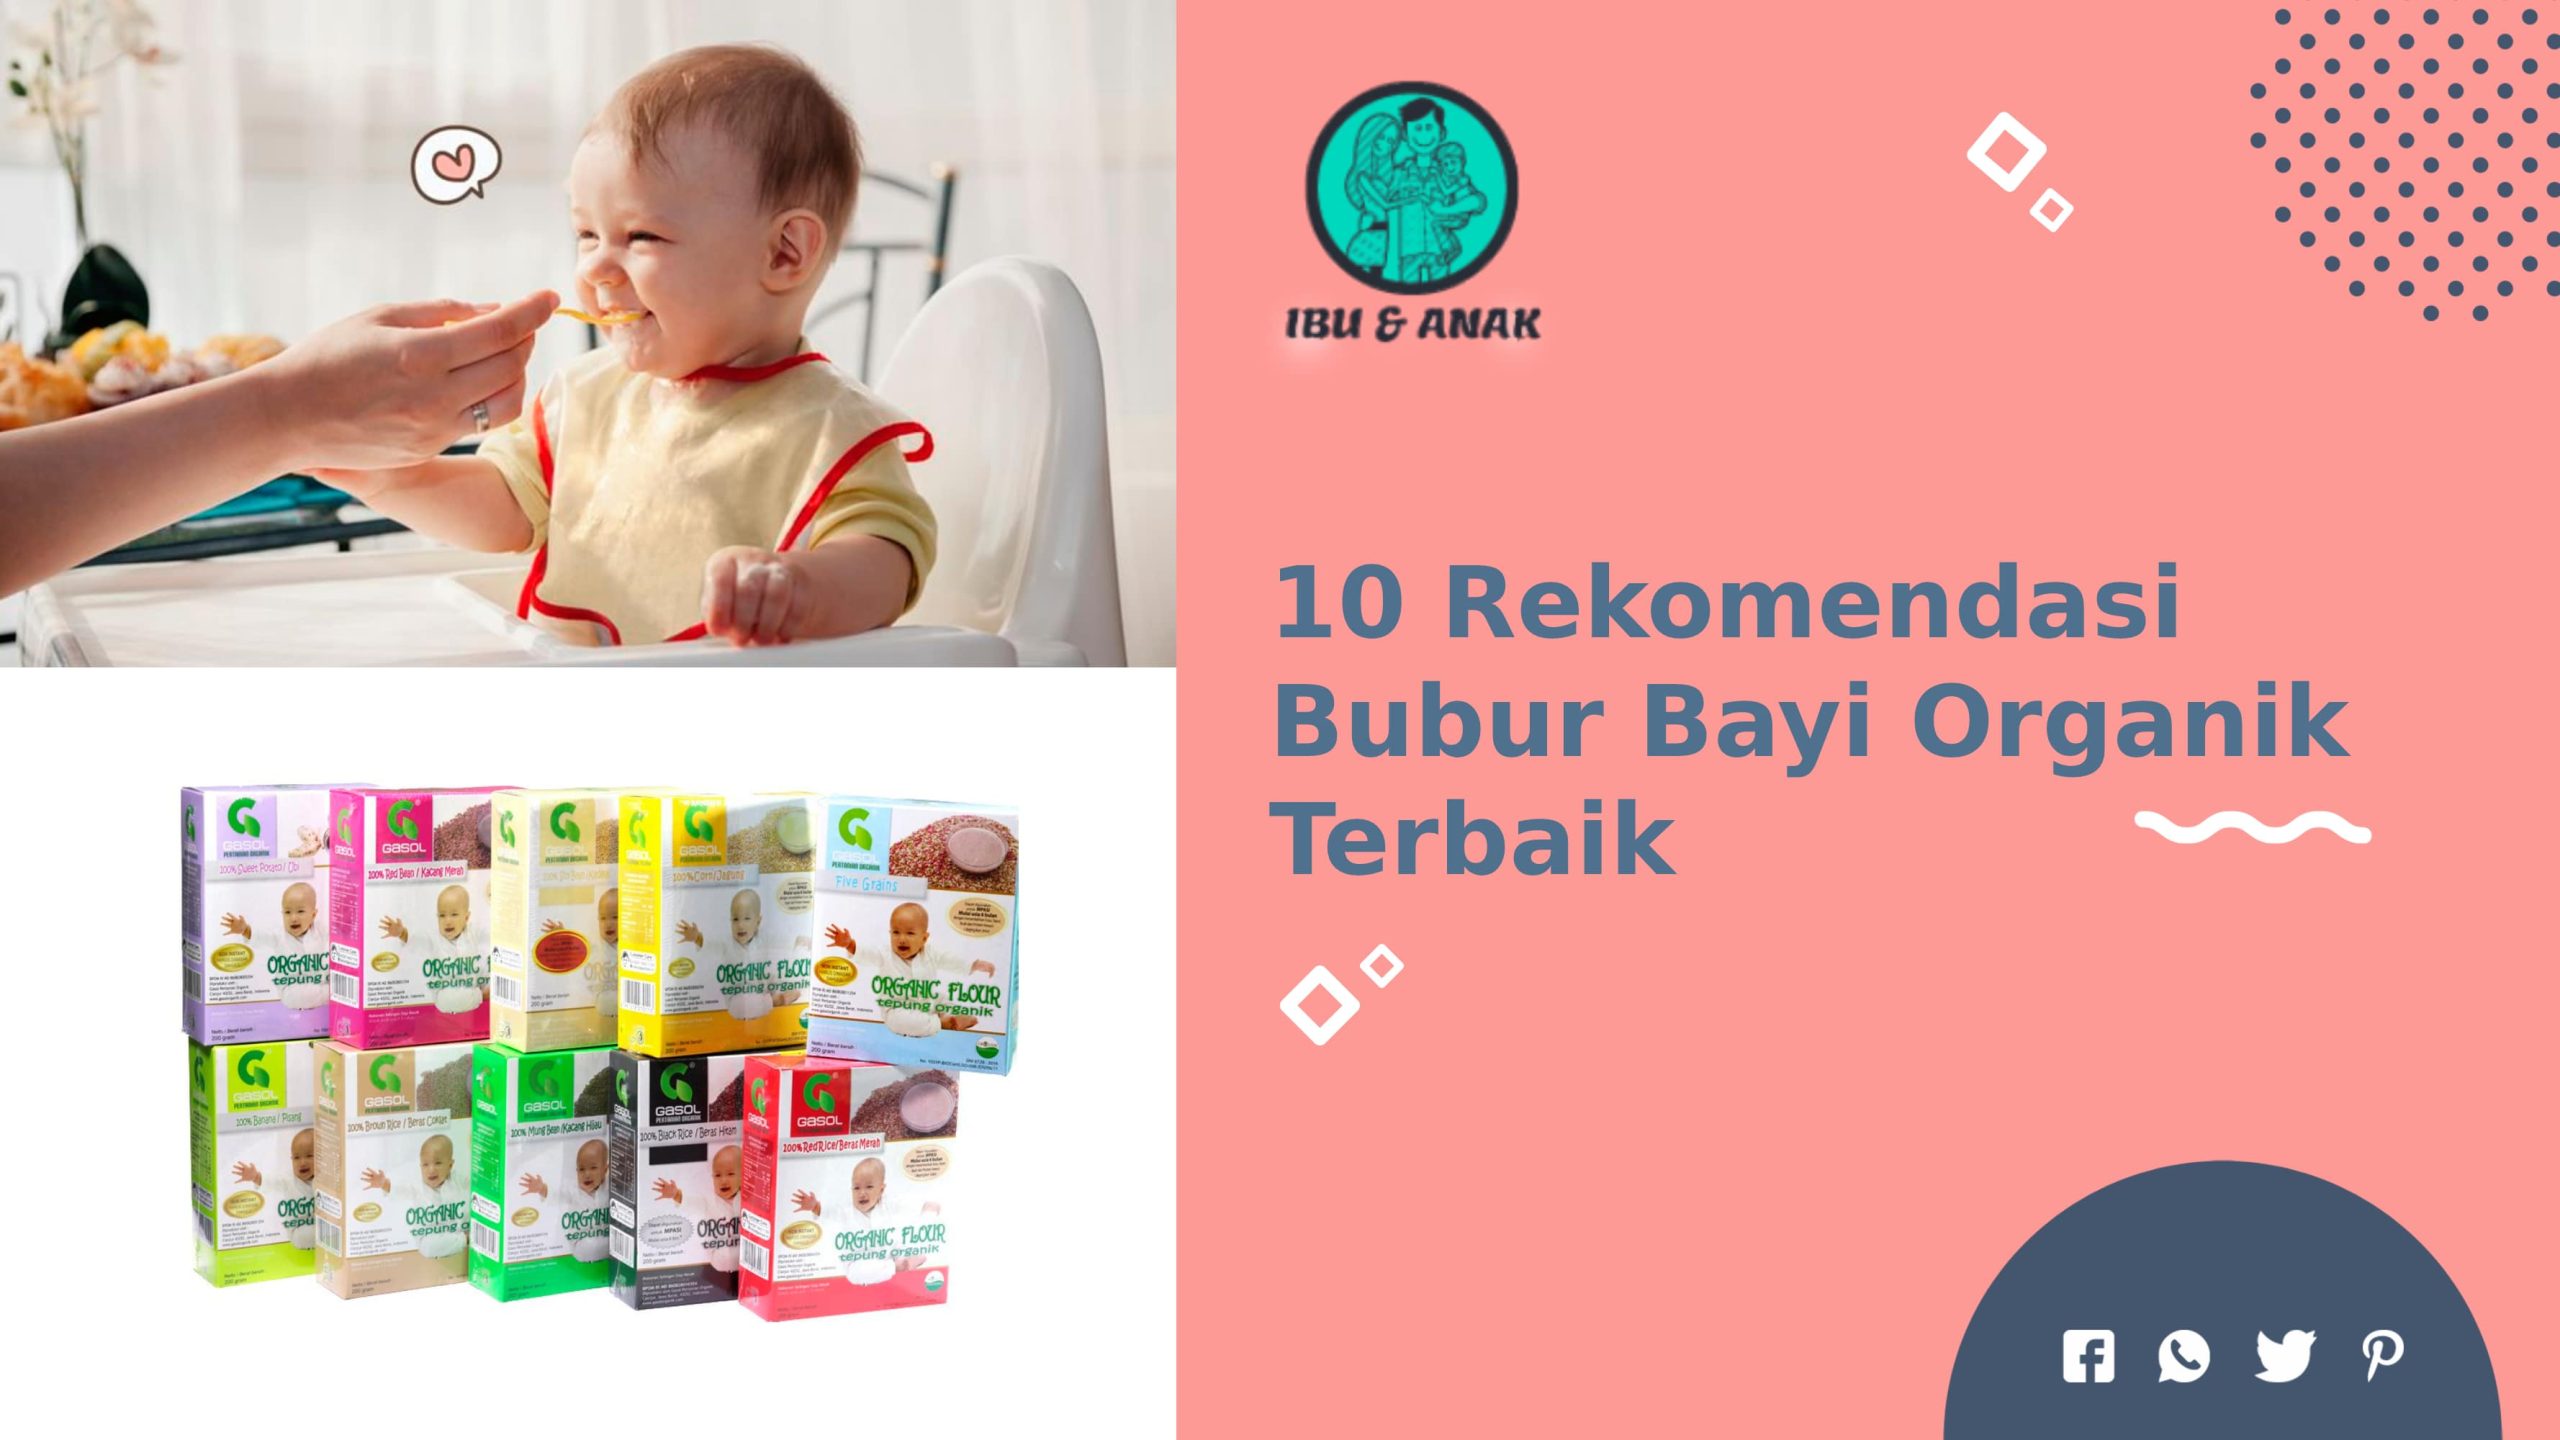 Rekomendasi Bubur Bayi Organik